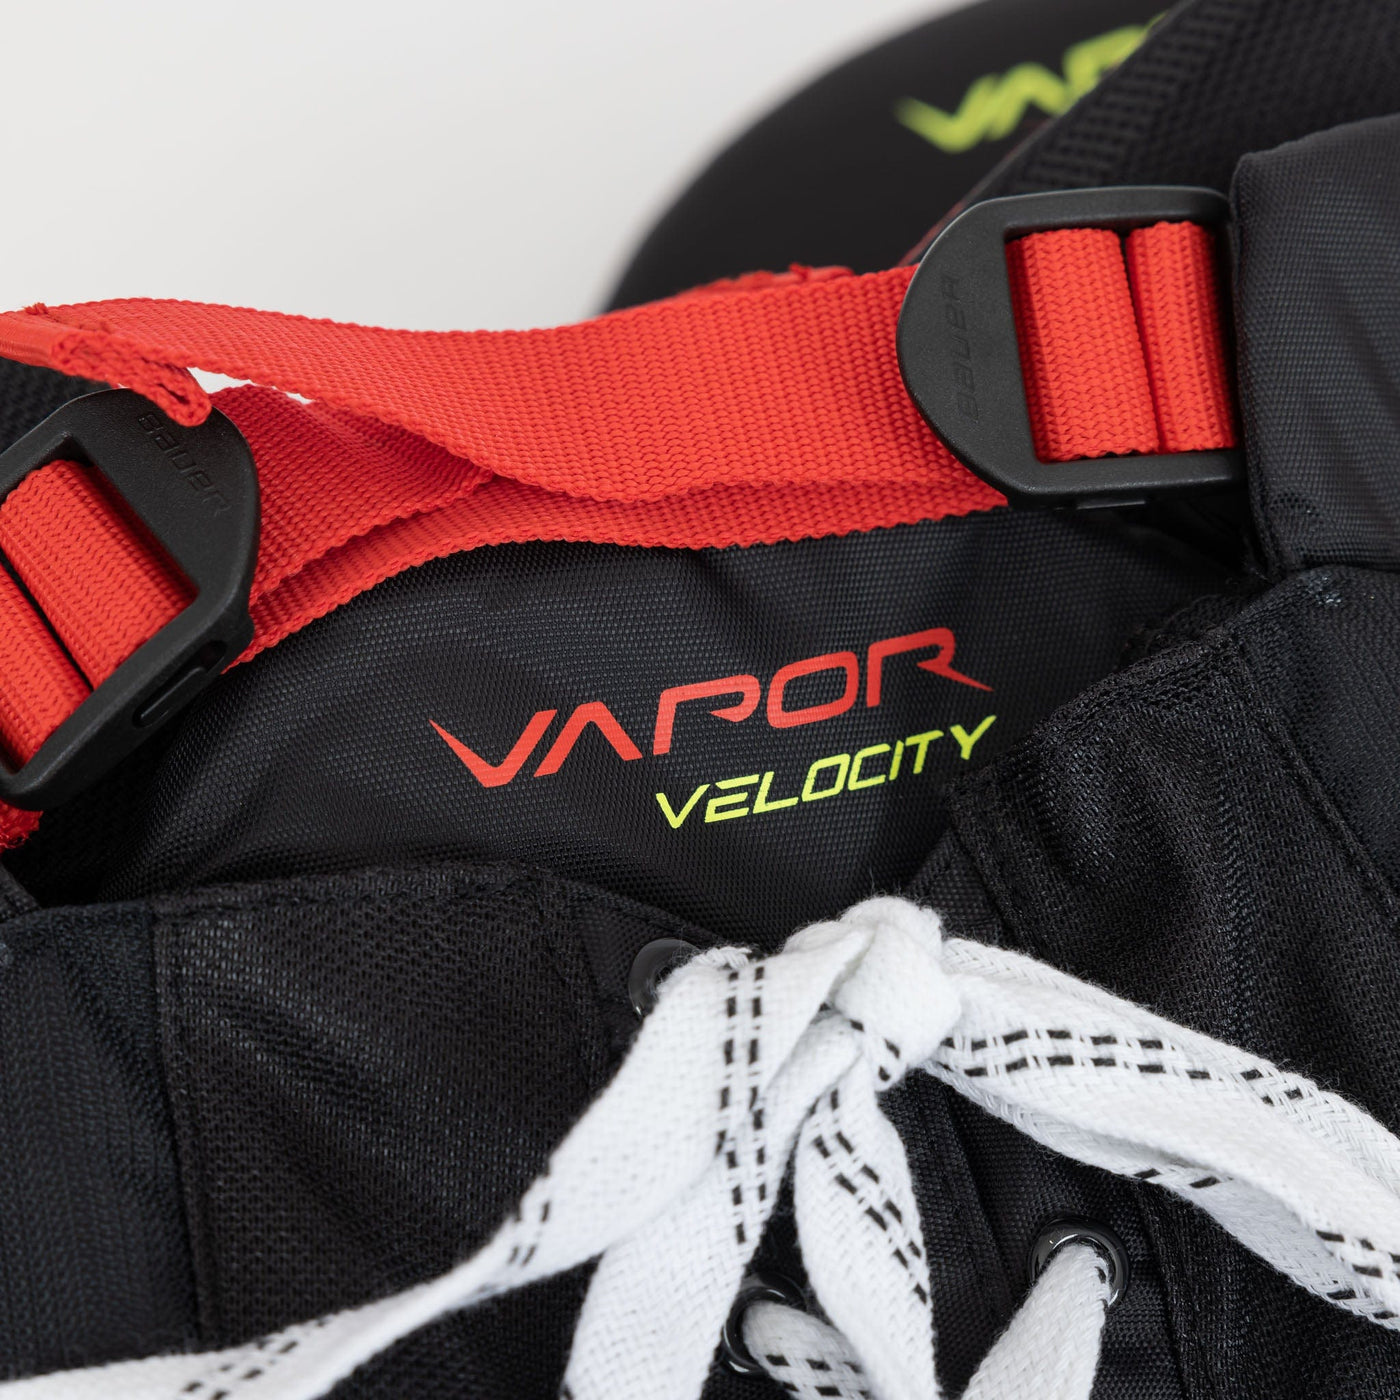 Bauer Vapor Velocity Junior Hockey Pants - The Hockey Shop Source For Sports